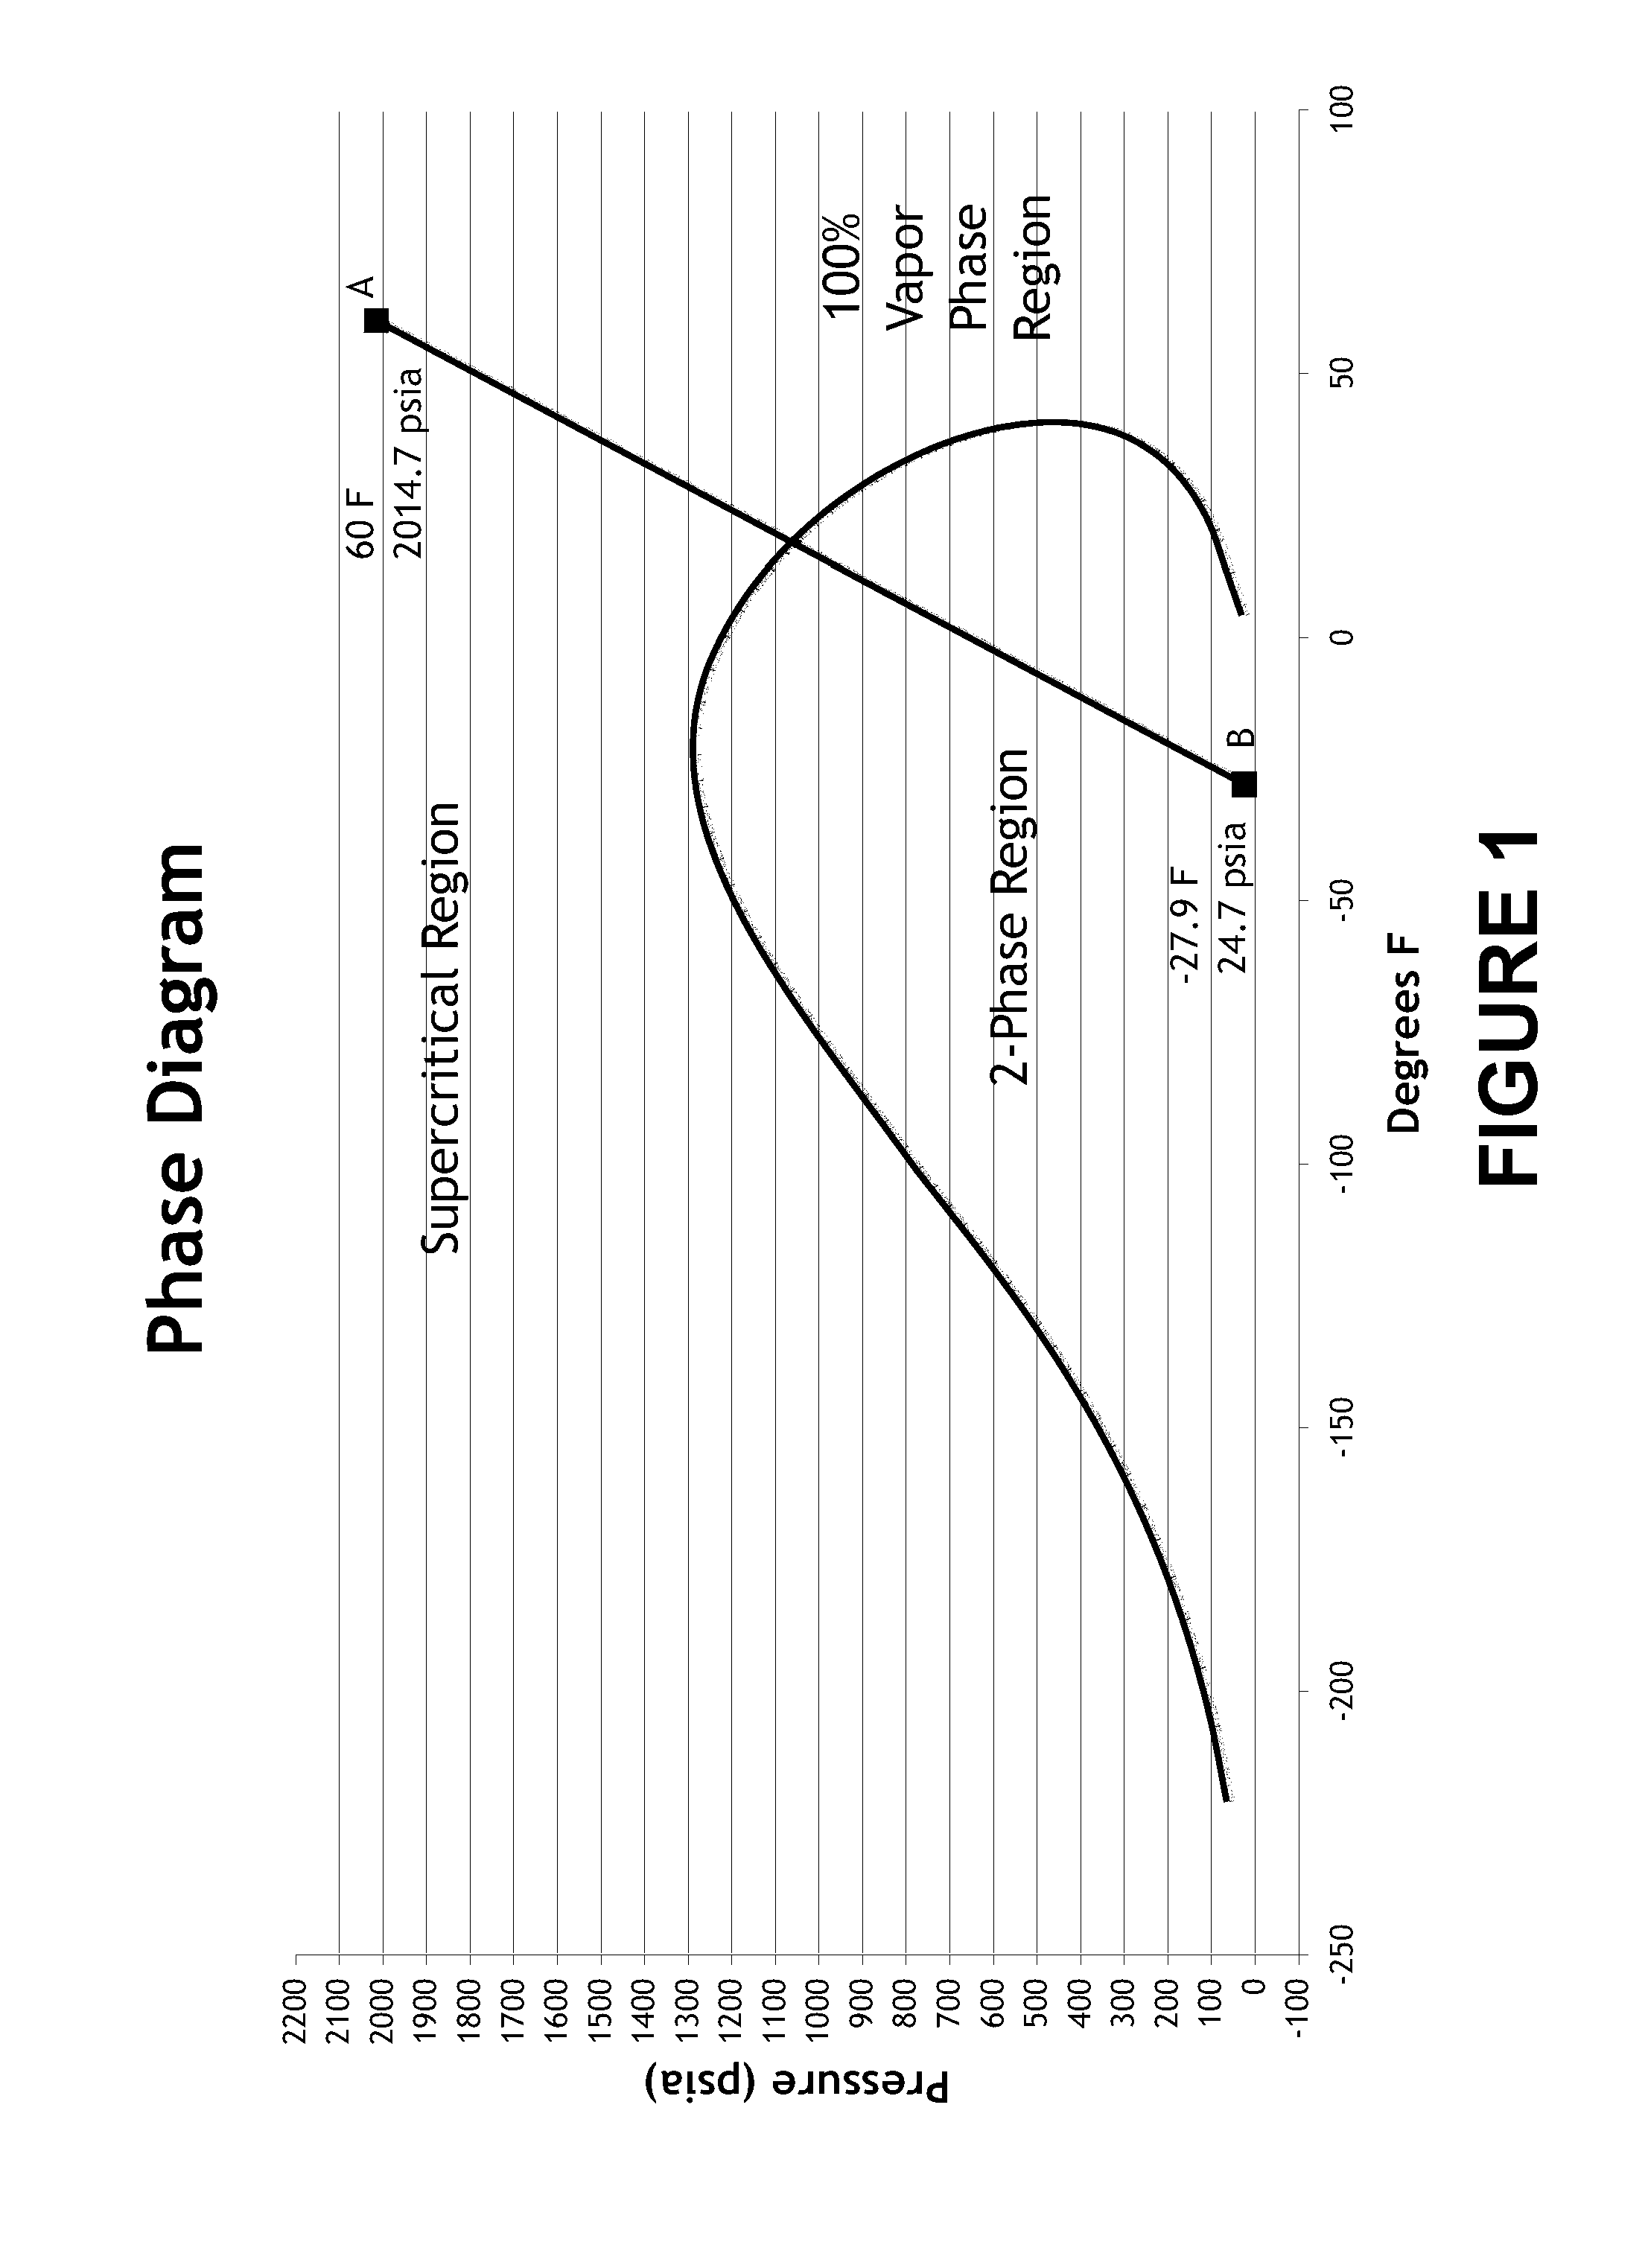 Multi-stage ratio pressure regulator system